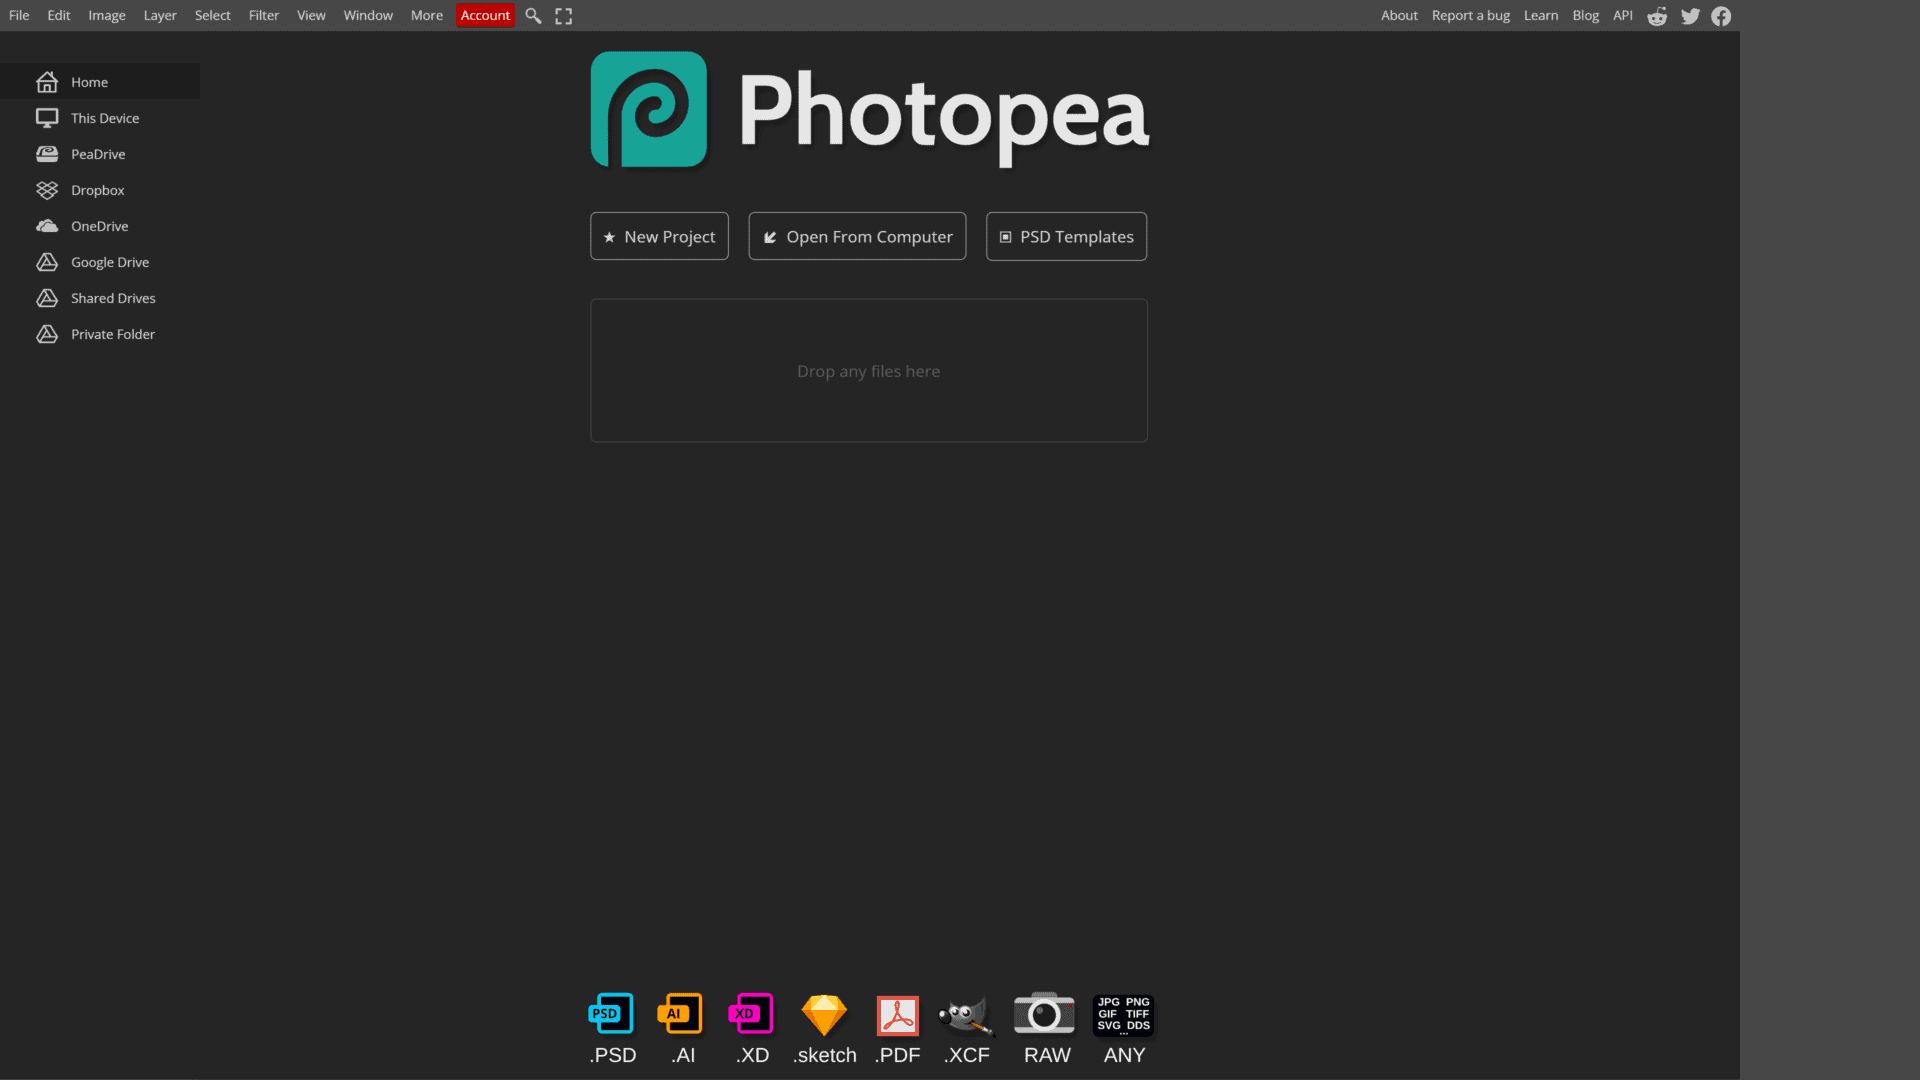 A screenshot of the photopea homepage